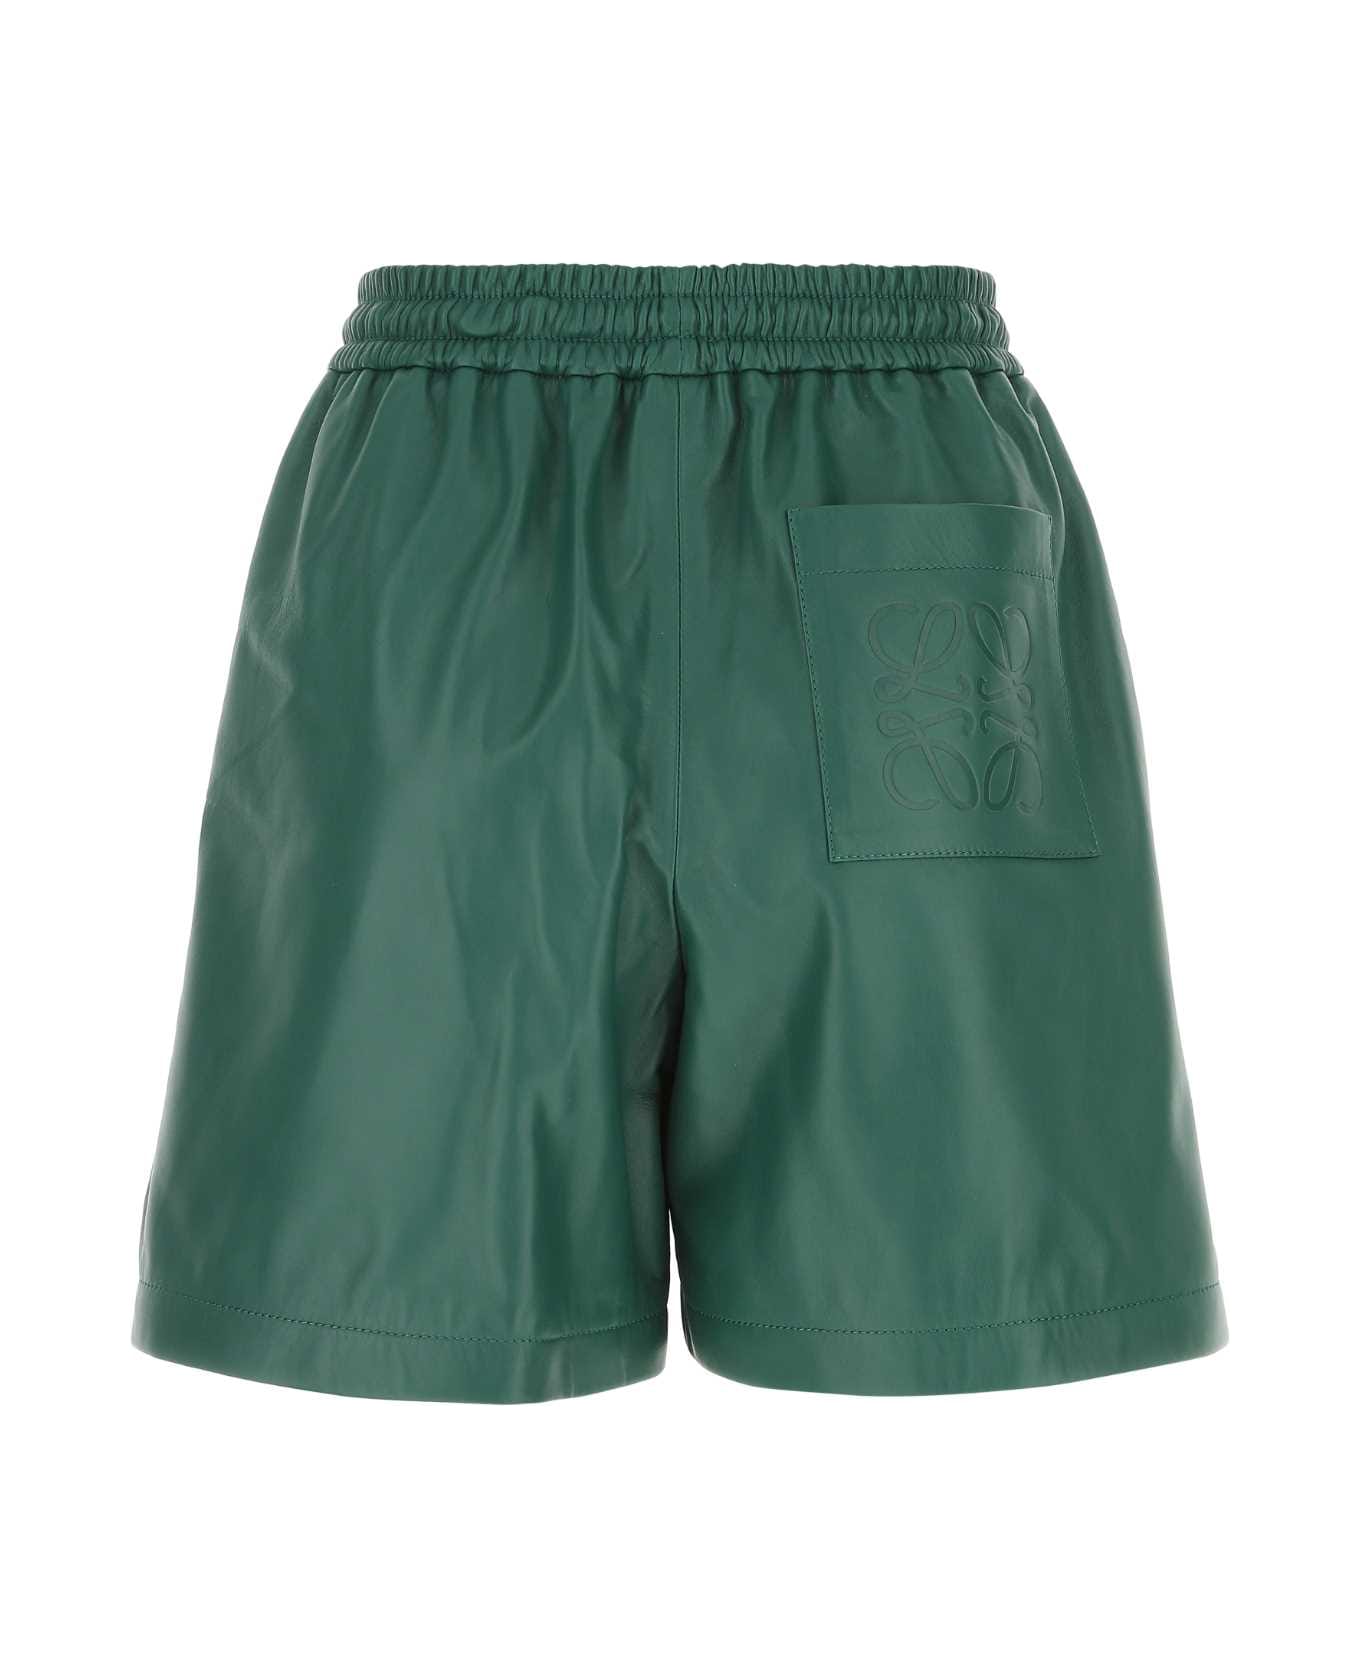 Loewe Bottle Green Nappa Leather Shorts - BOTTLEGREEN ショートパンツ